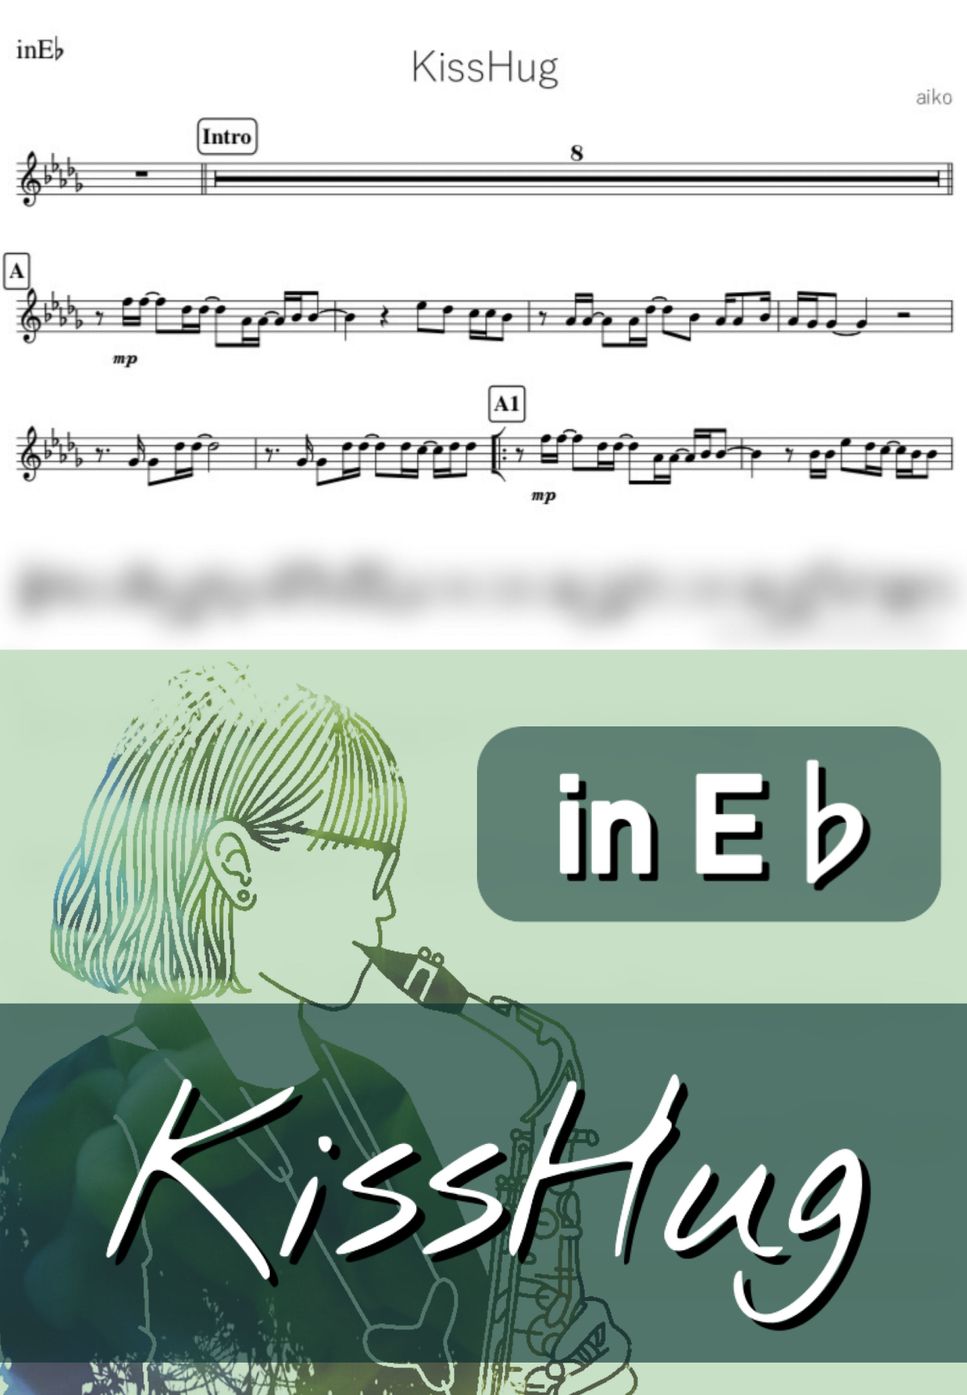 aiko - KissHug (E♭) by kanamusic